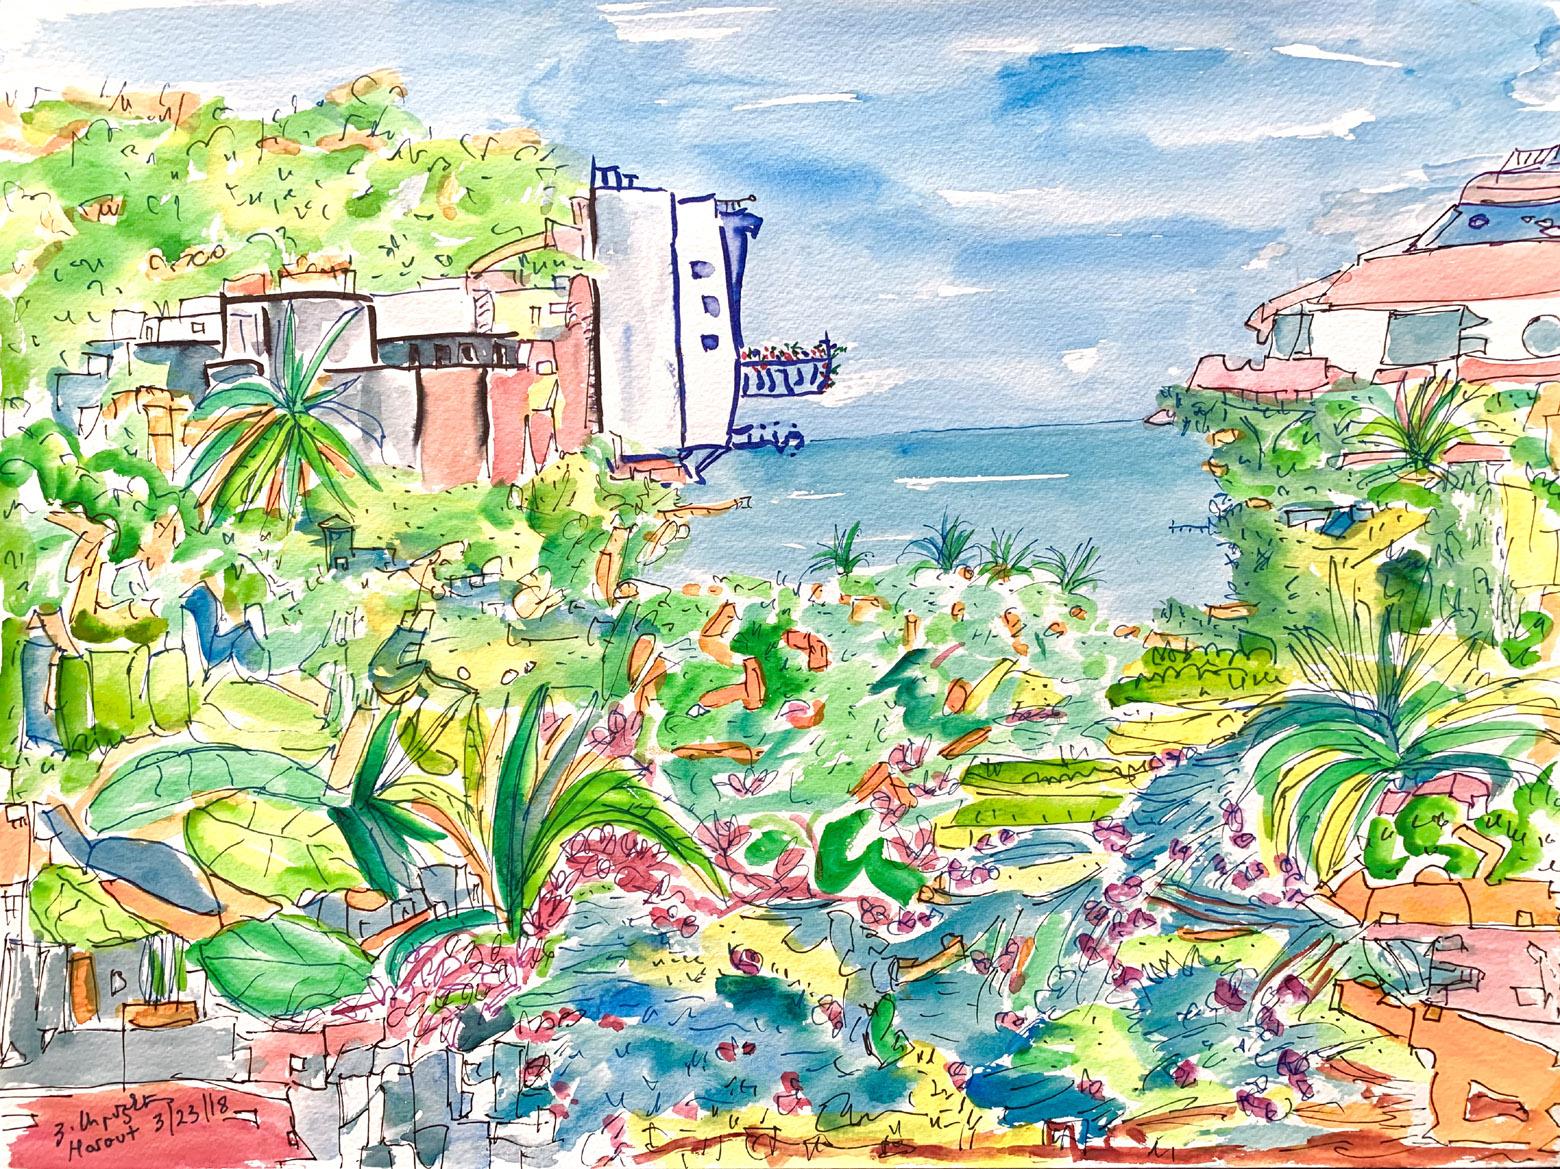 Haroutune Armenian Landscape Painting - Free Flowing, Puerto Vallarta 2018 12x16 watercolor on paper 1